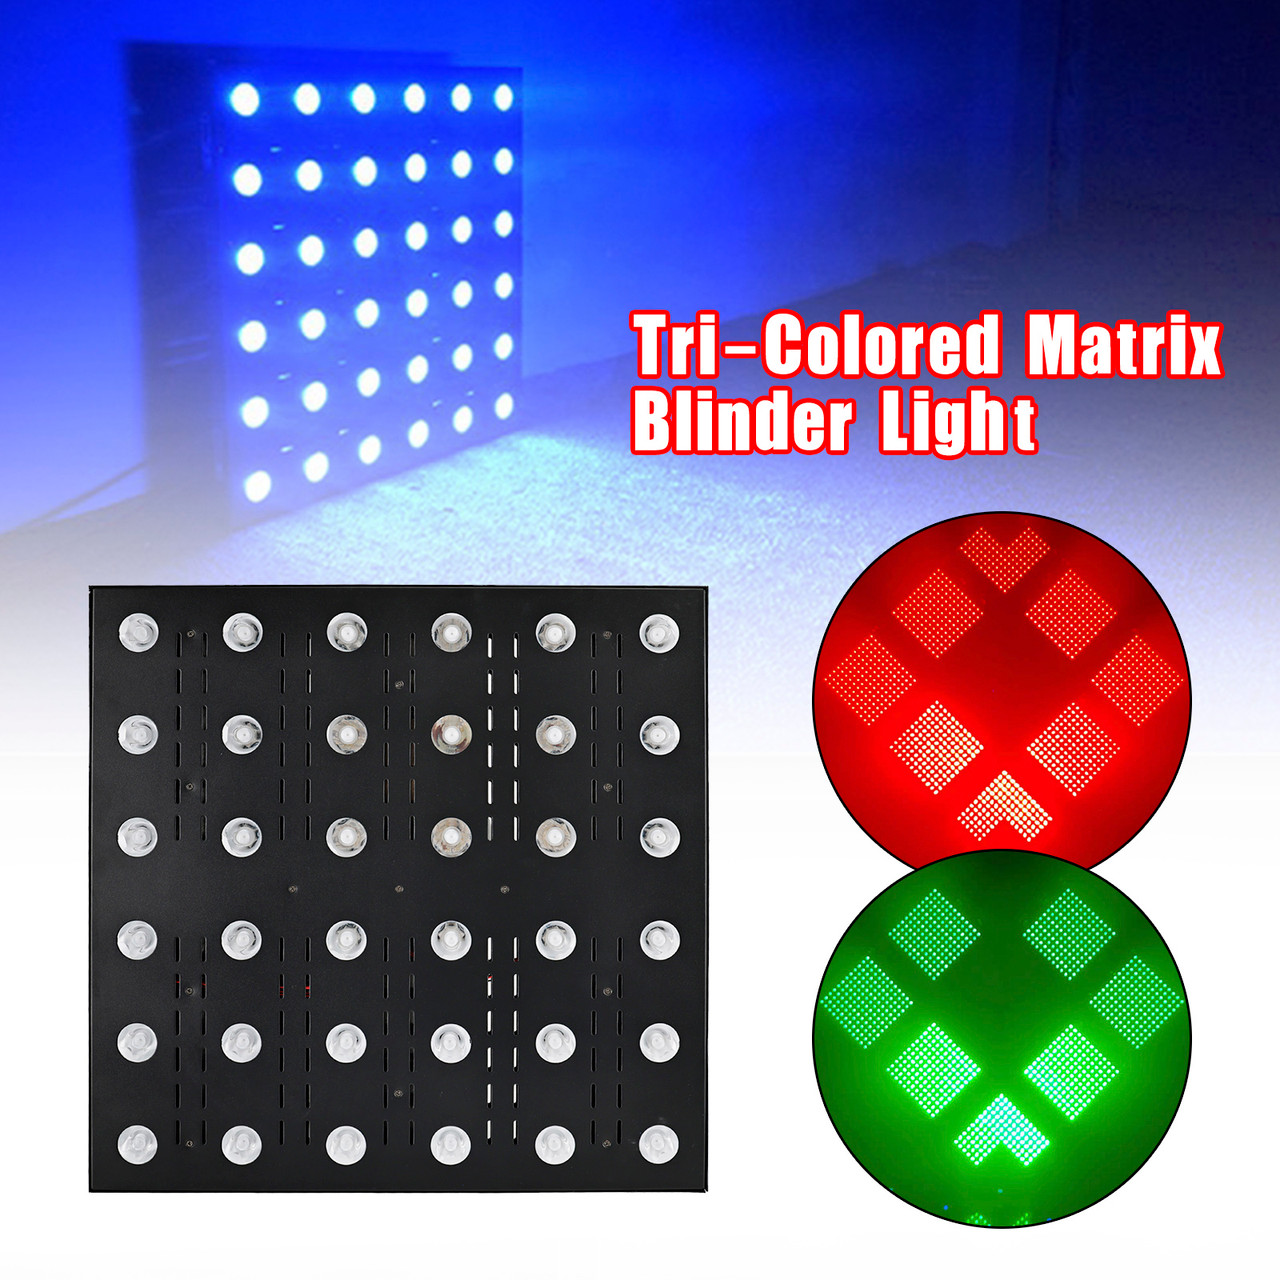 Stage Matrix 36 RGB 6x6 Tri-Colored Matrix Blinder Light DJ Band Effect Lighting